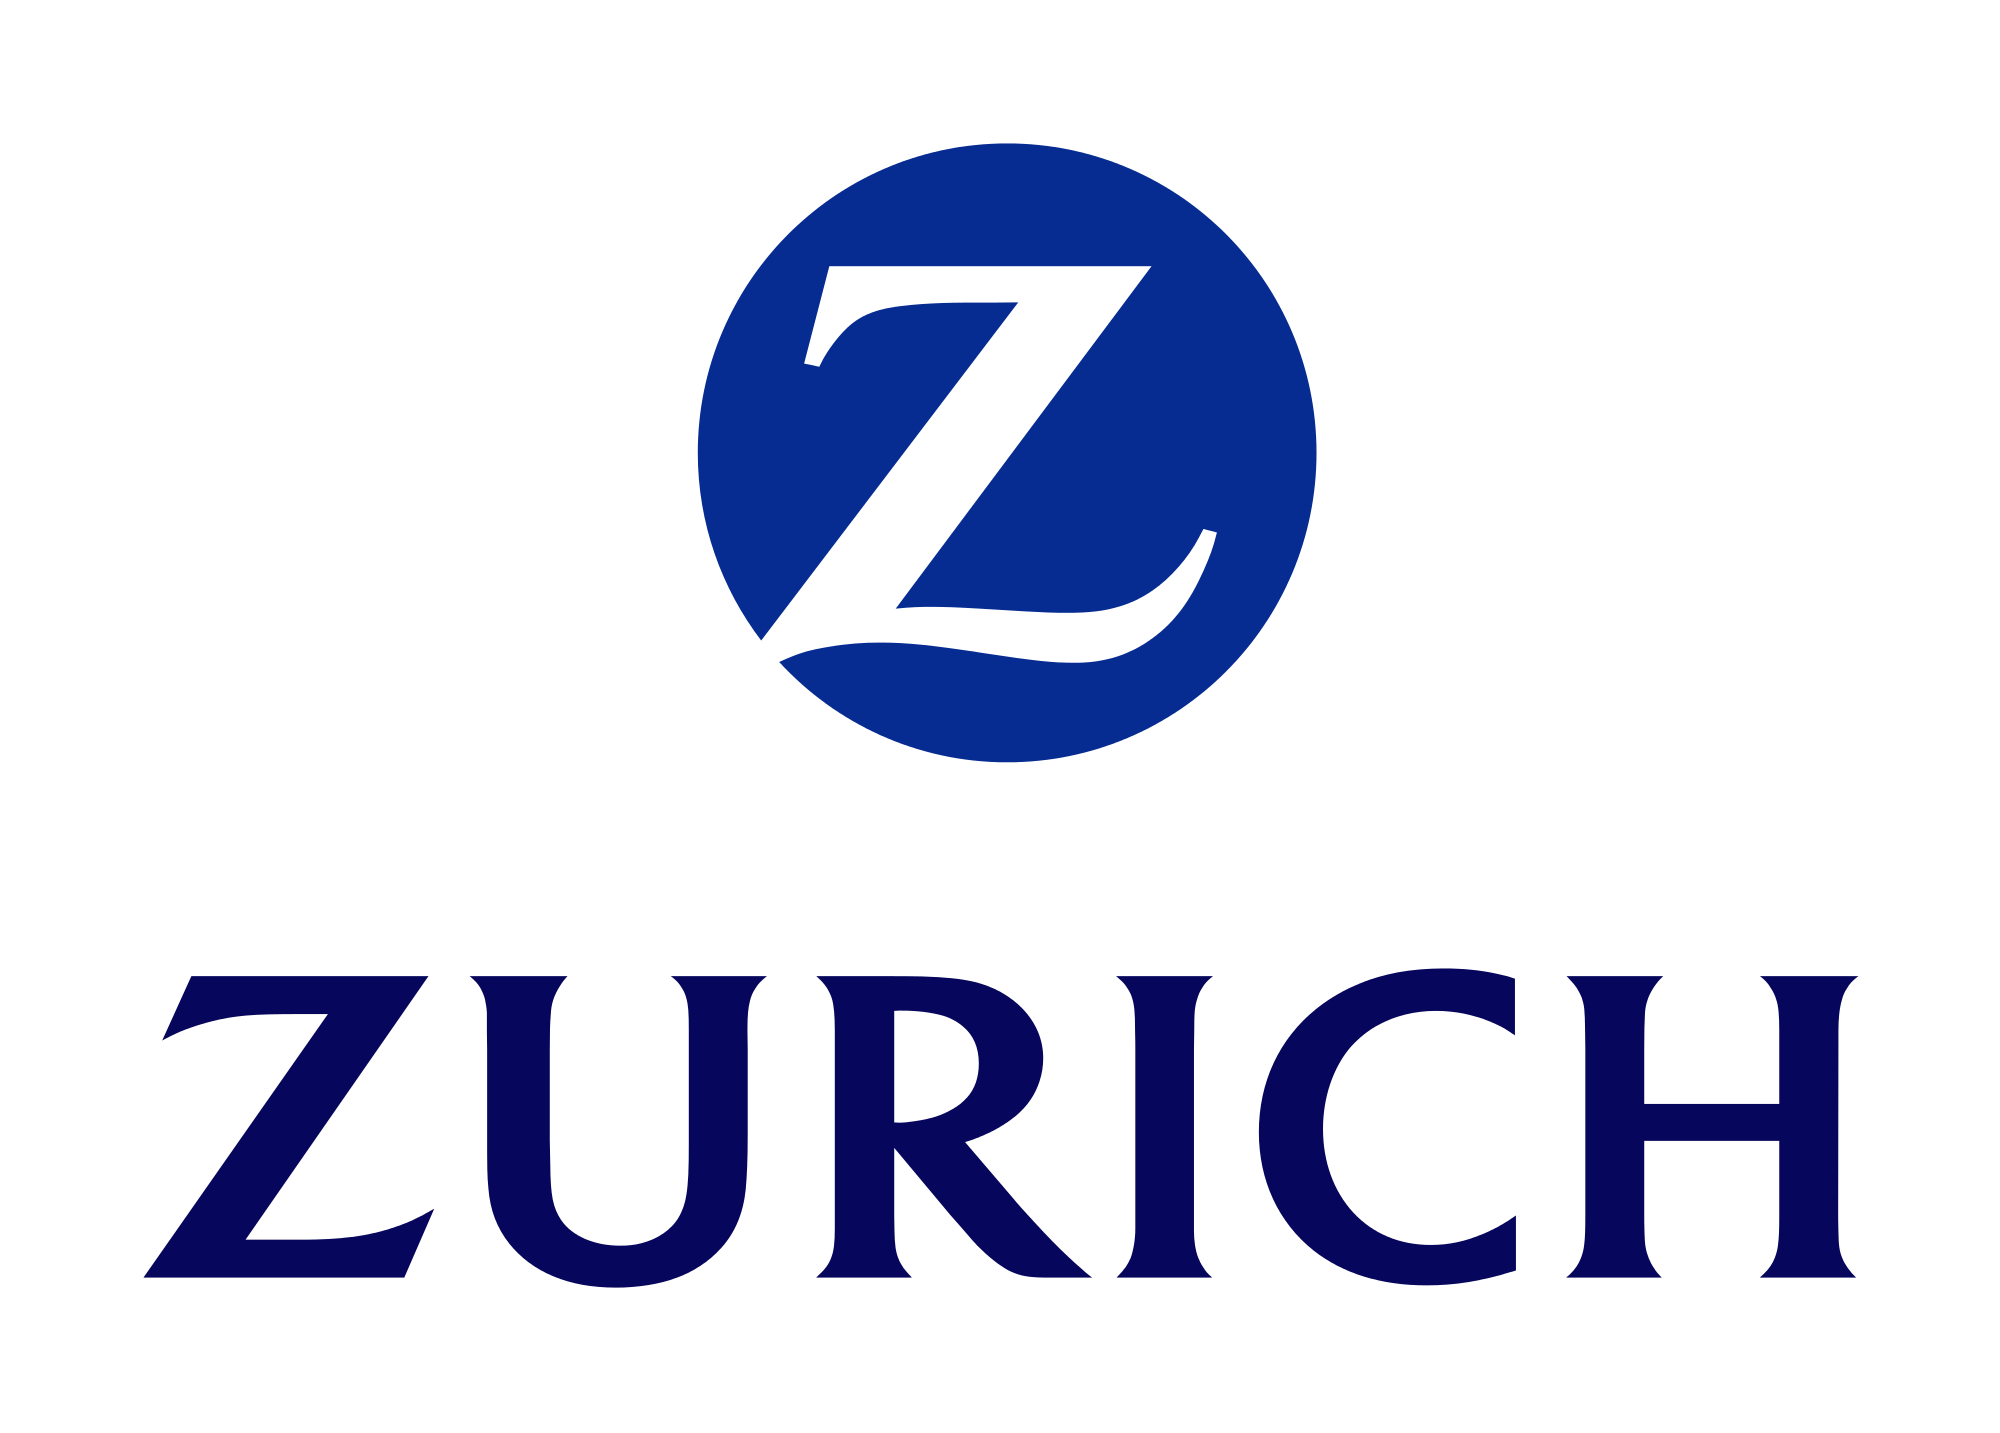 Zurich’s exposure to Ukraine conflict minimal, reserves strengthened: Berenberg